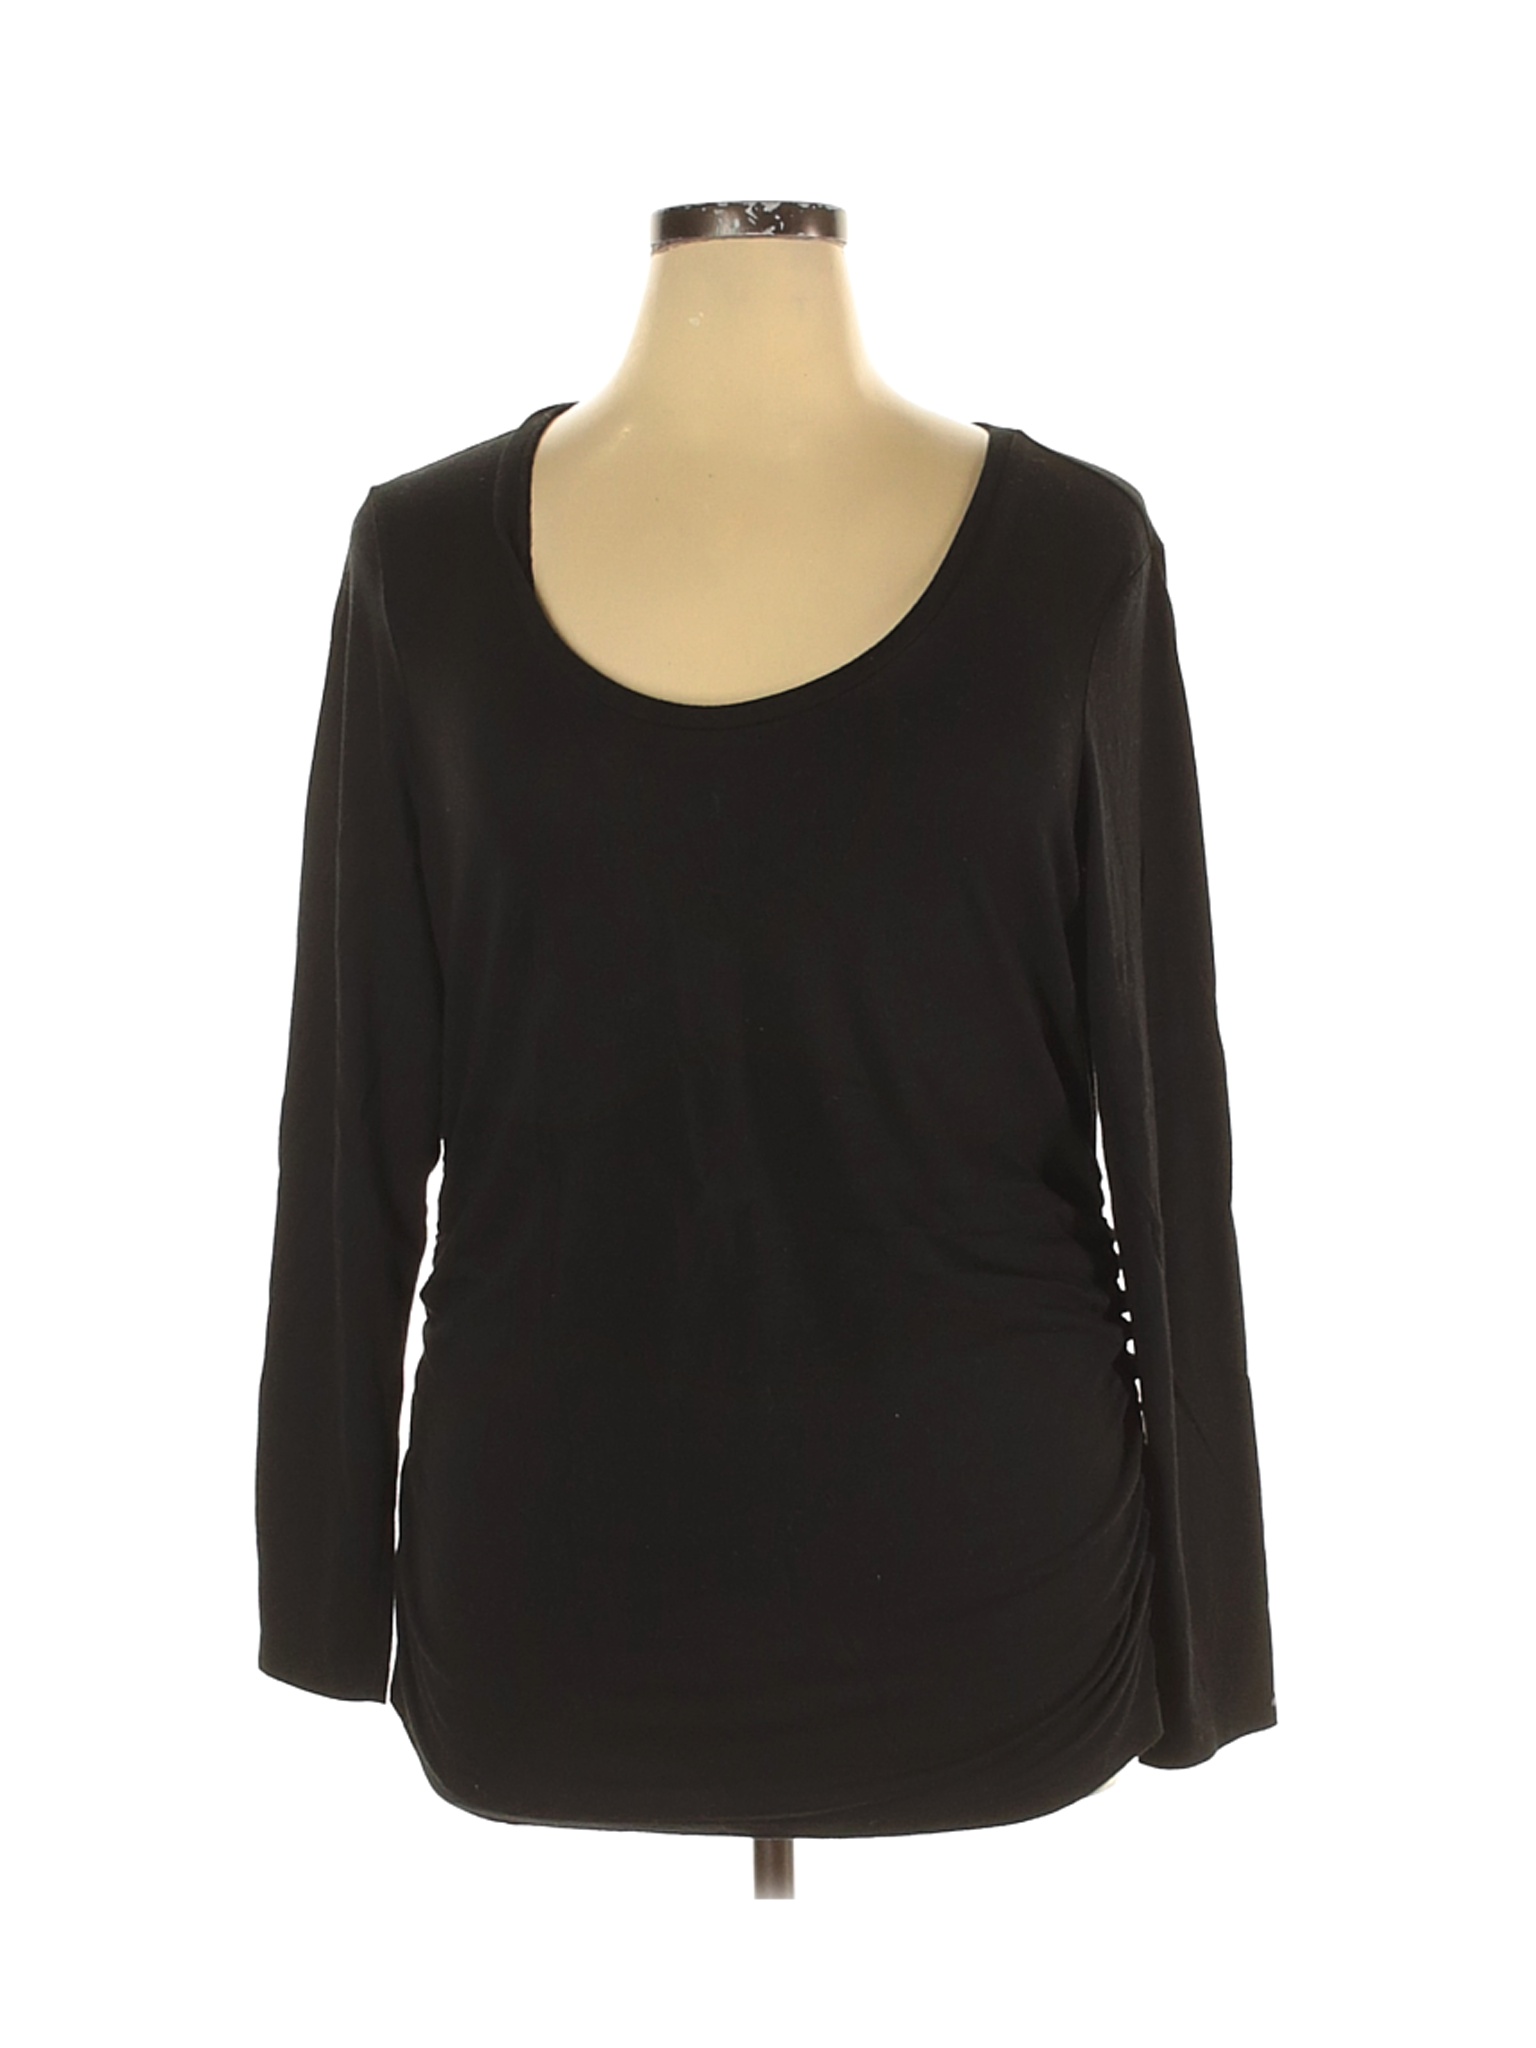 Old Navy Women Black Long Sleeve T-Shirt XL | eBay